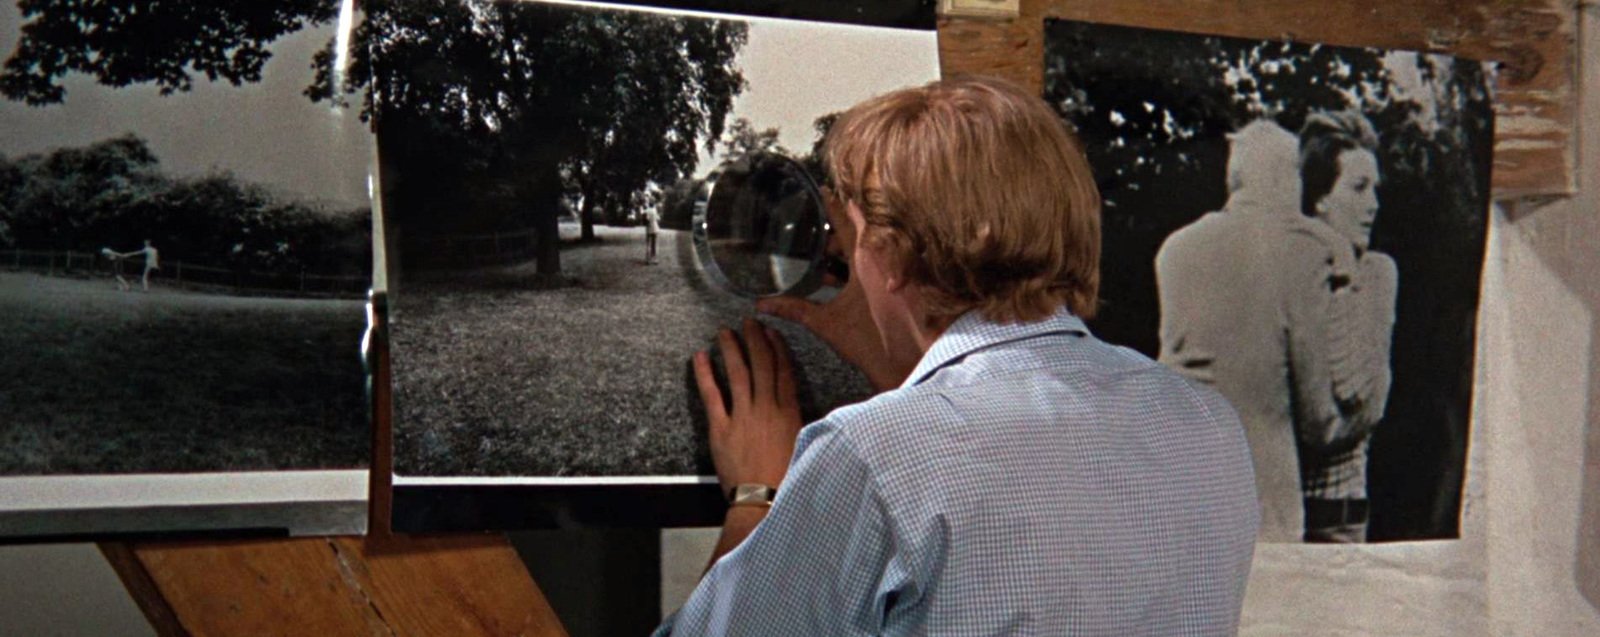 Image: Still shot from the movie Blowup, dir. Michelangelo Antonioni, 1966.